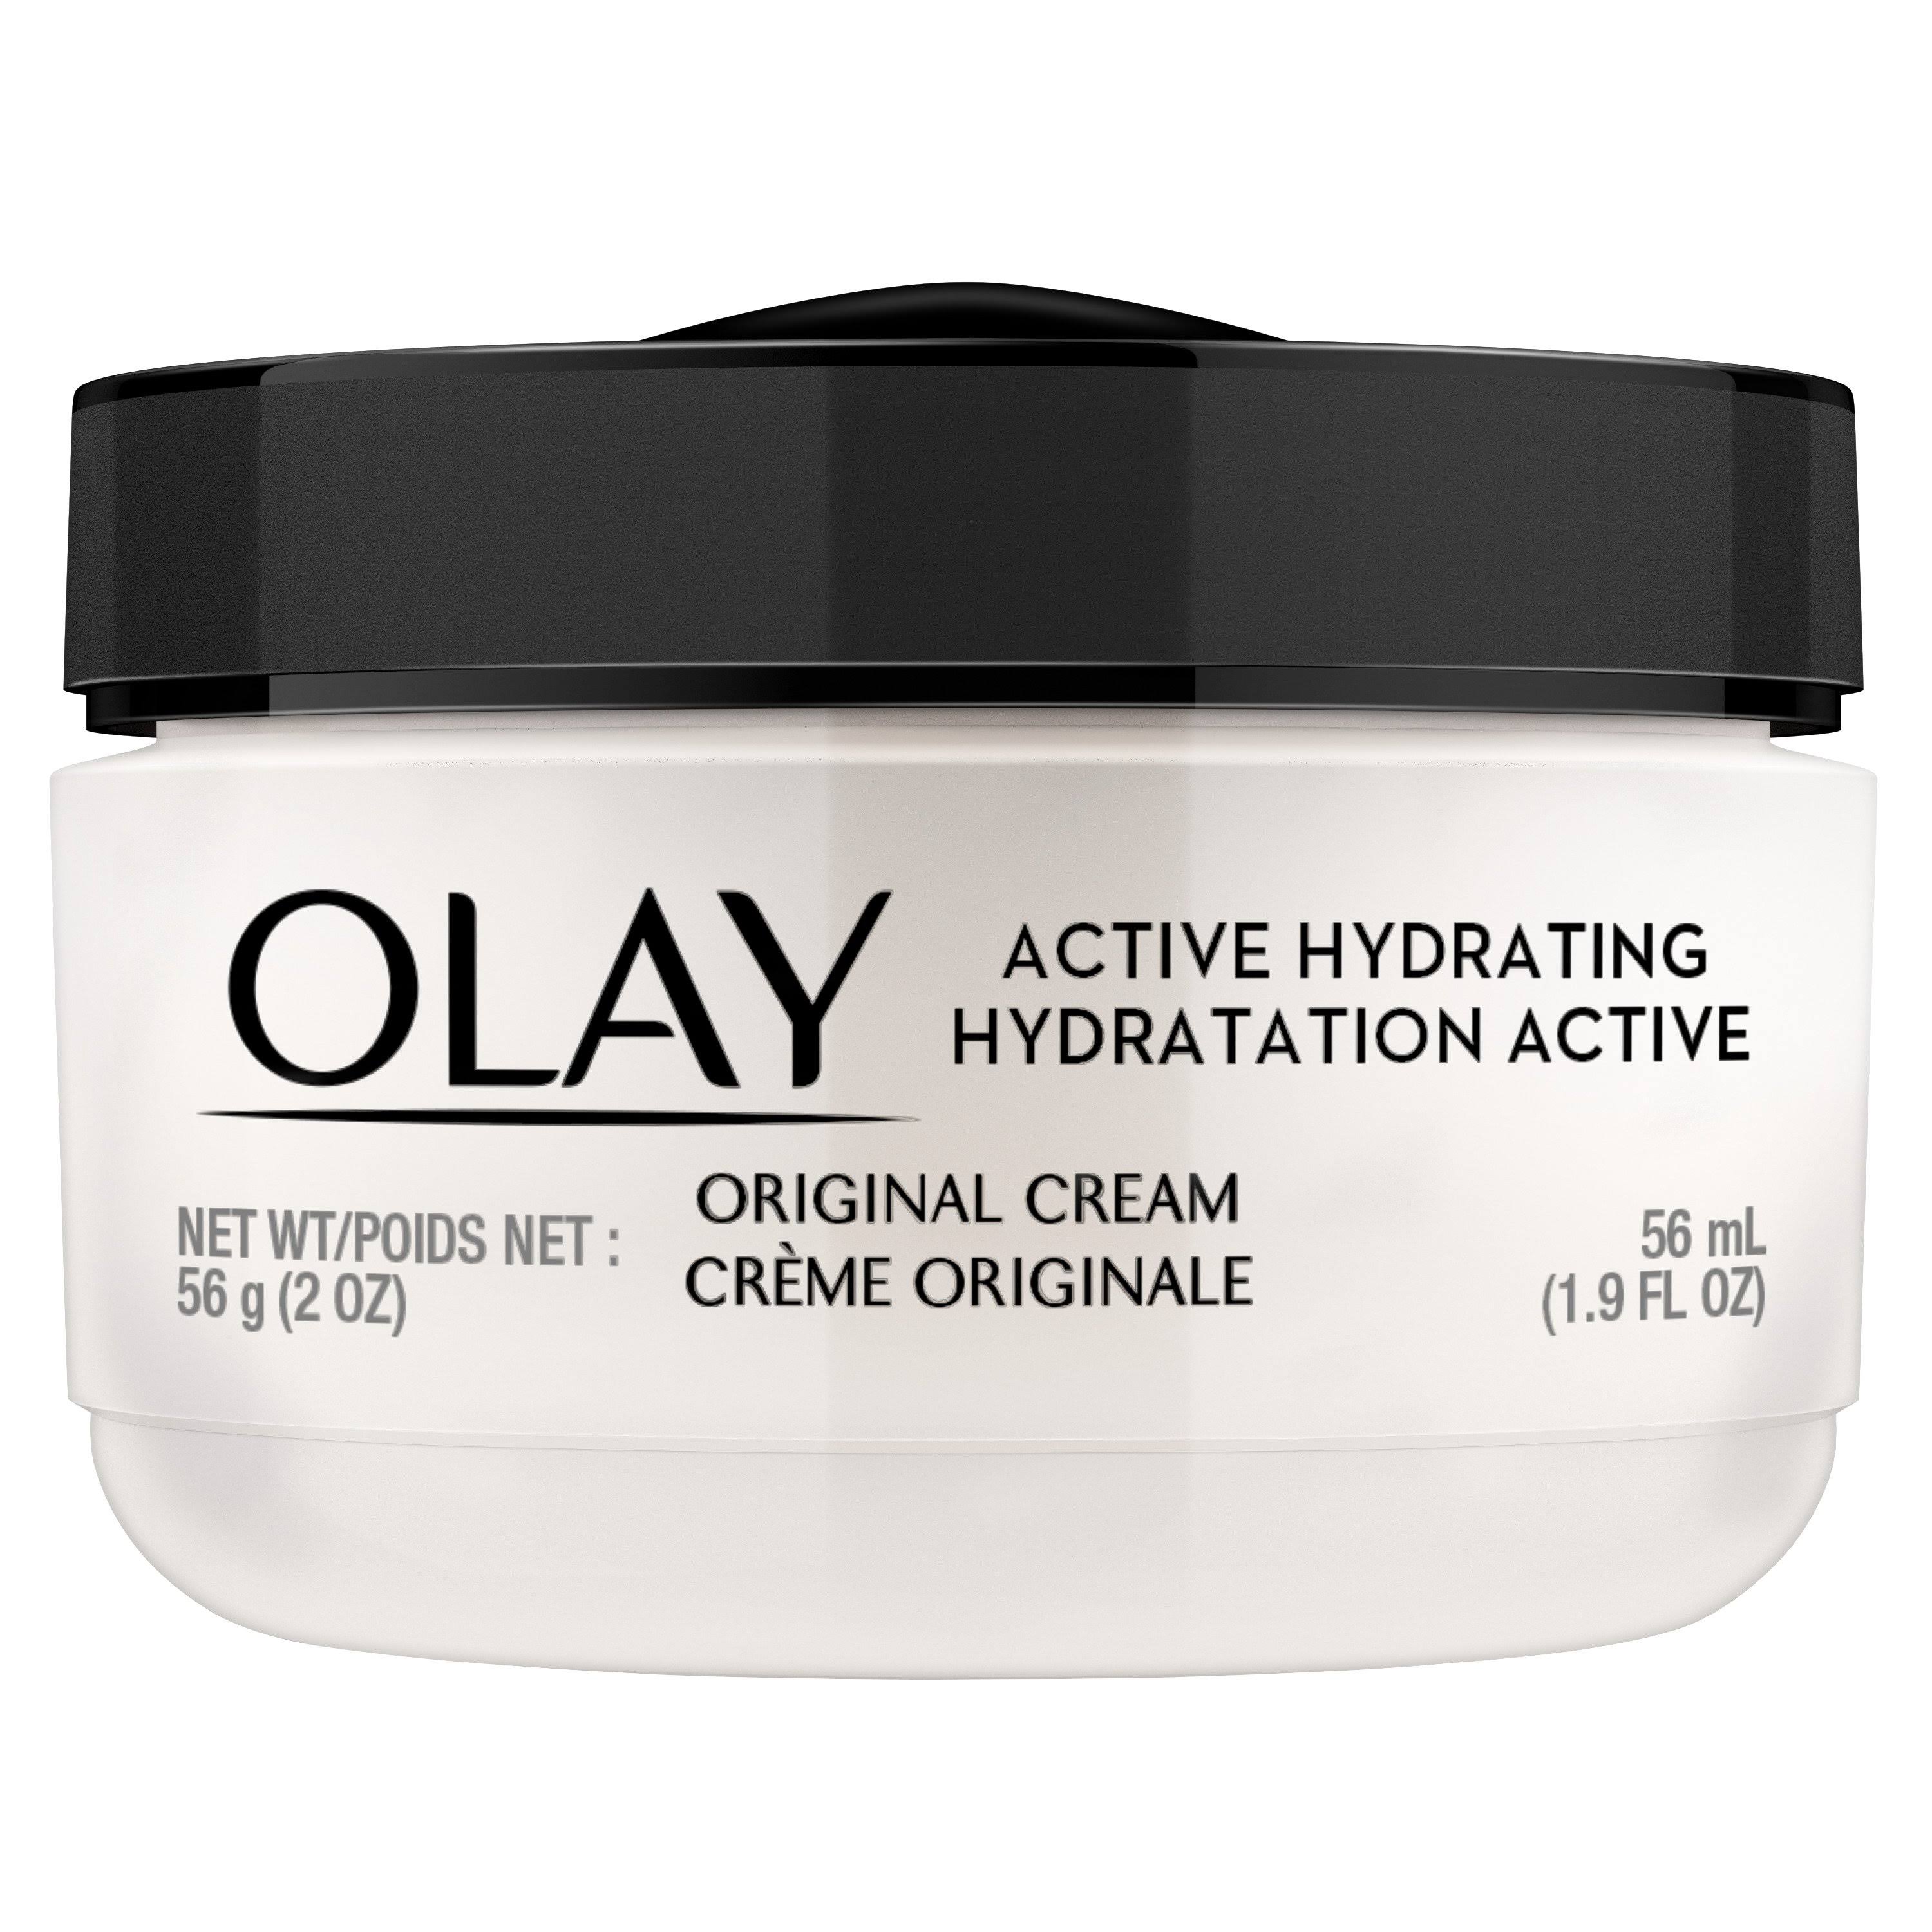 Olay Active Hydrating Cream